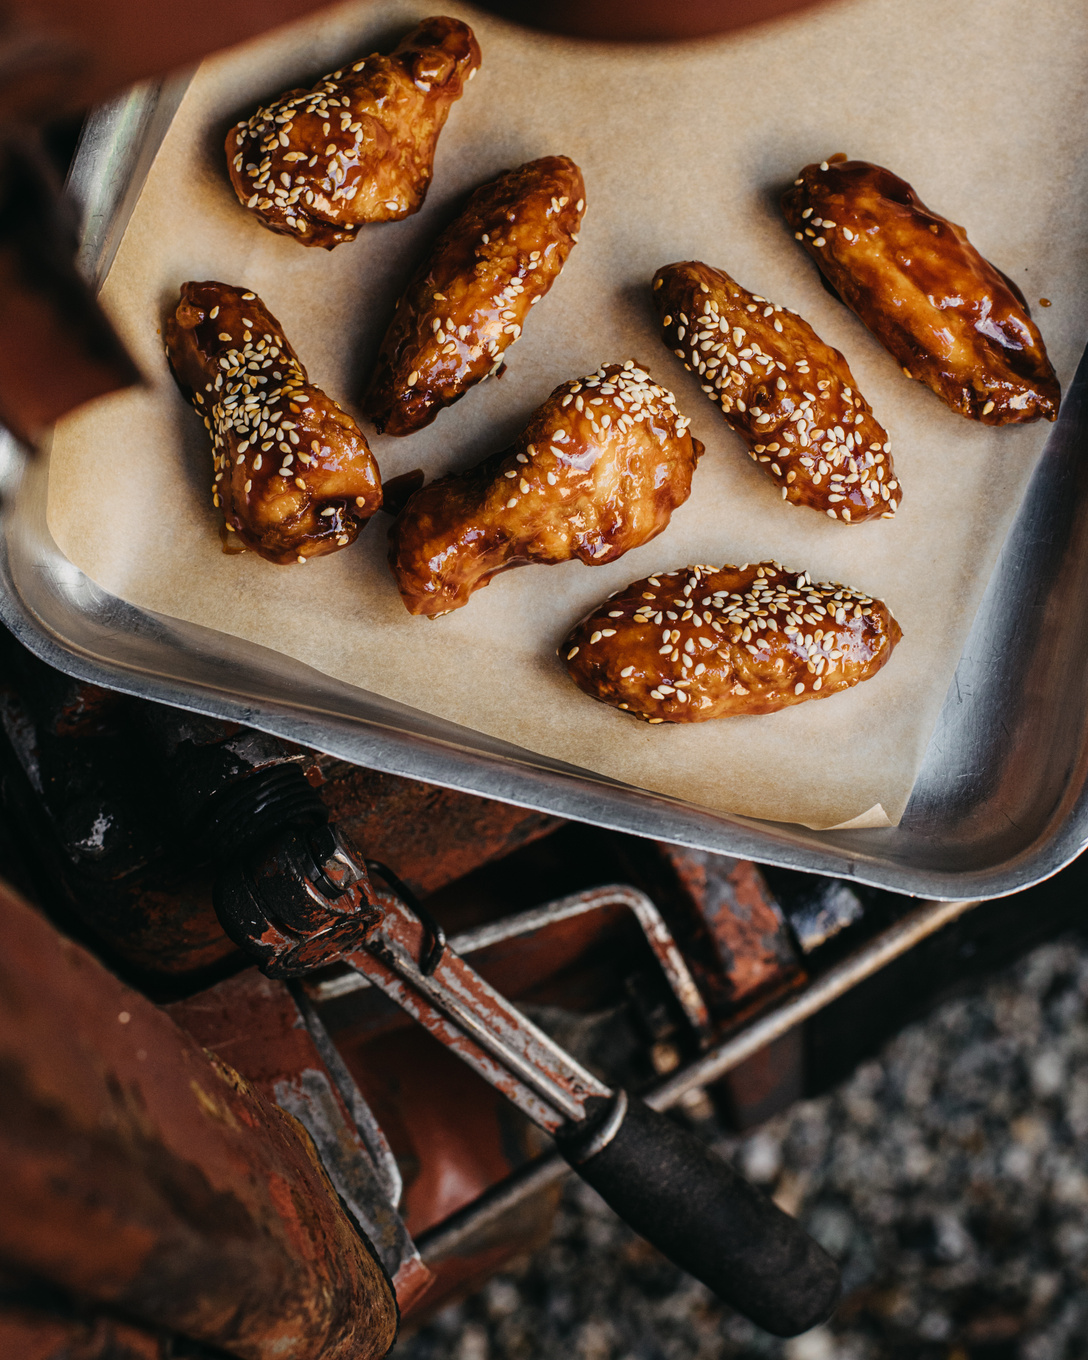 Roasted chicken wings on baking pan